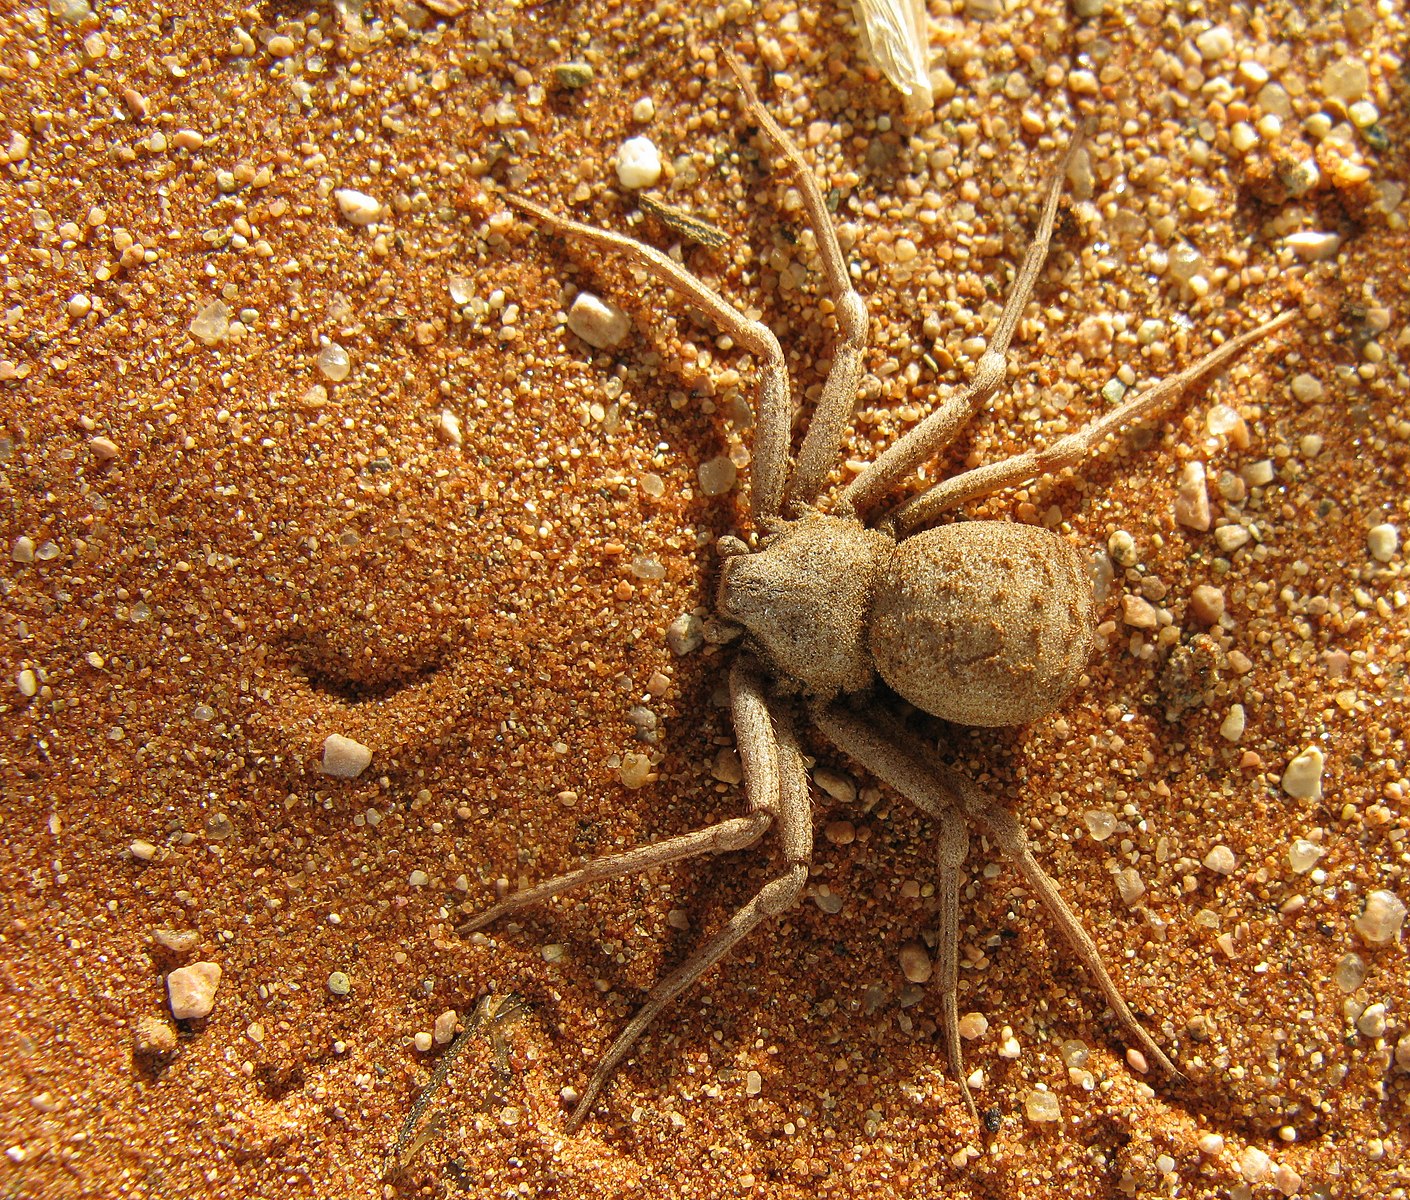 six-eyed sand spider